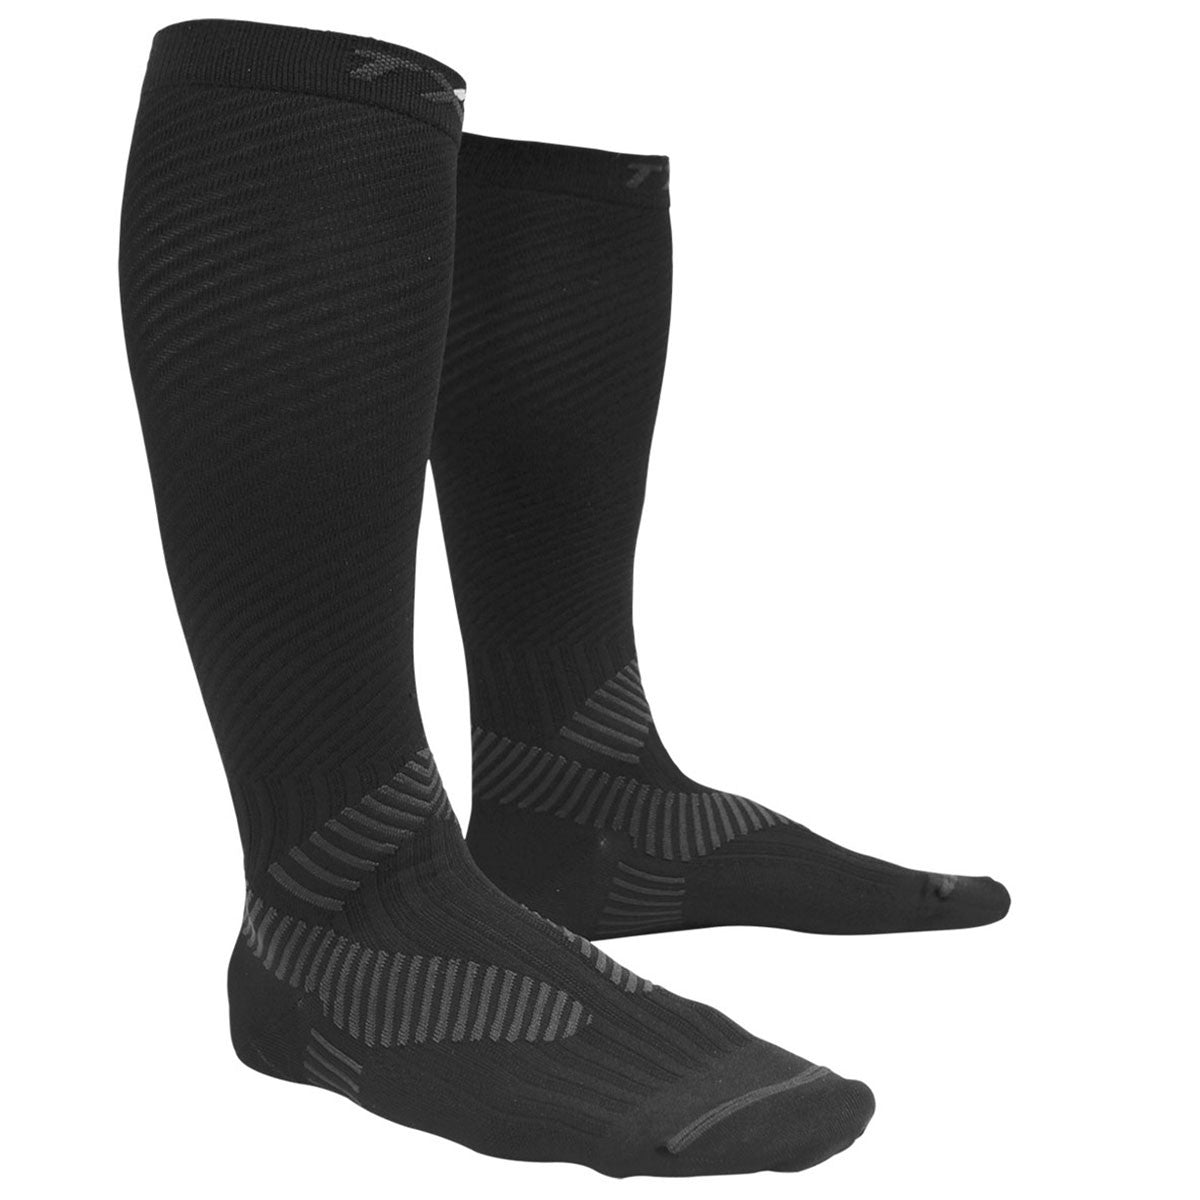 Sports Compression Socks Australia | TXG Compression Wear